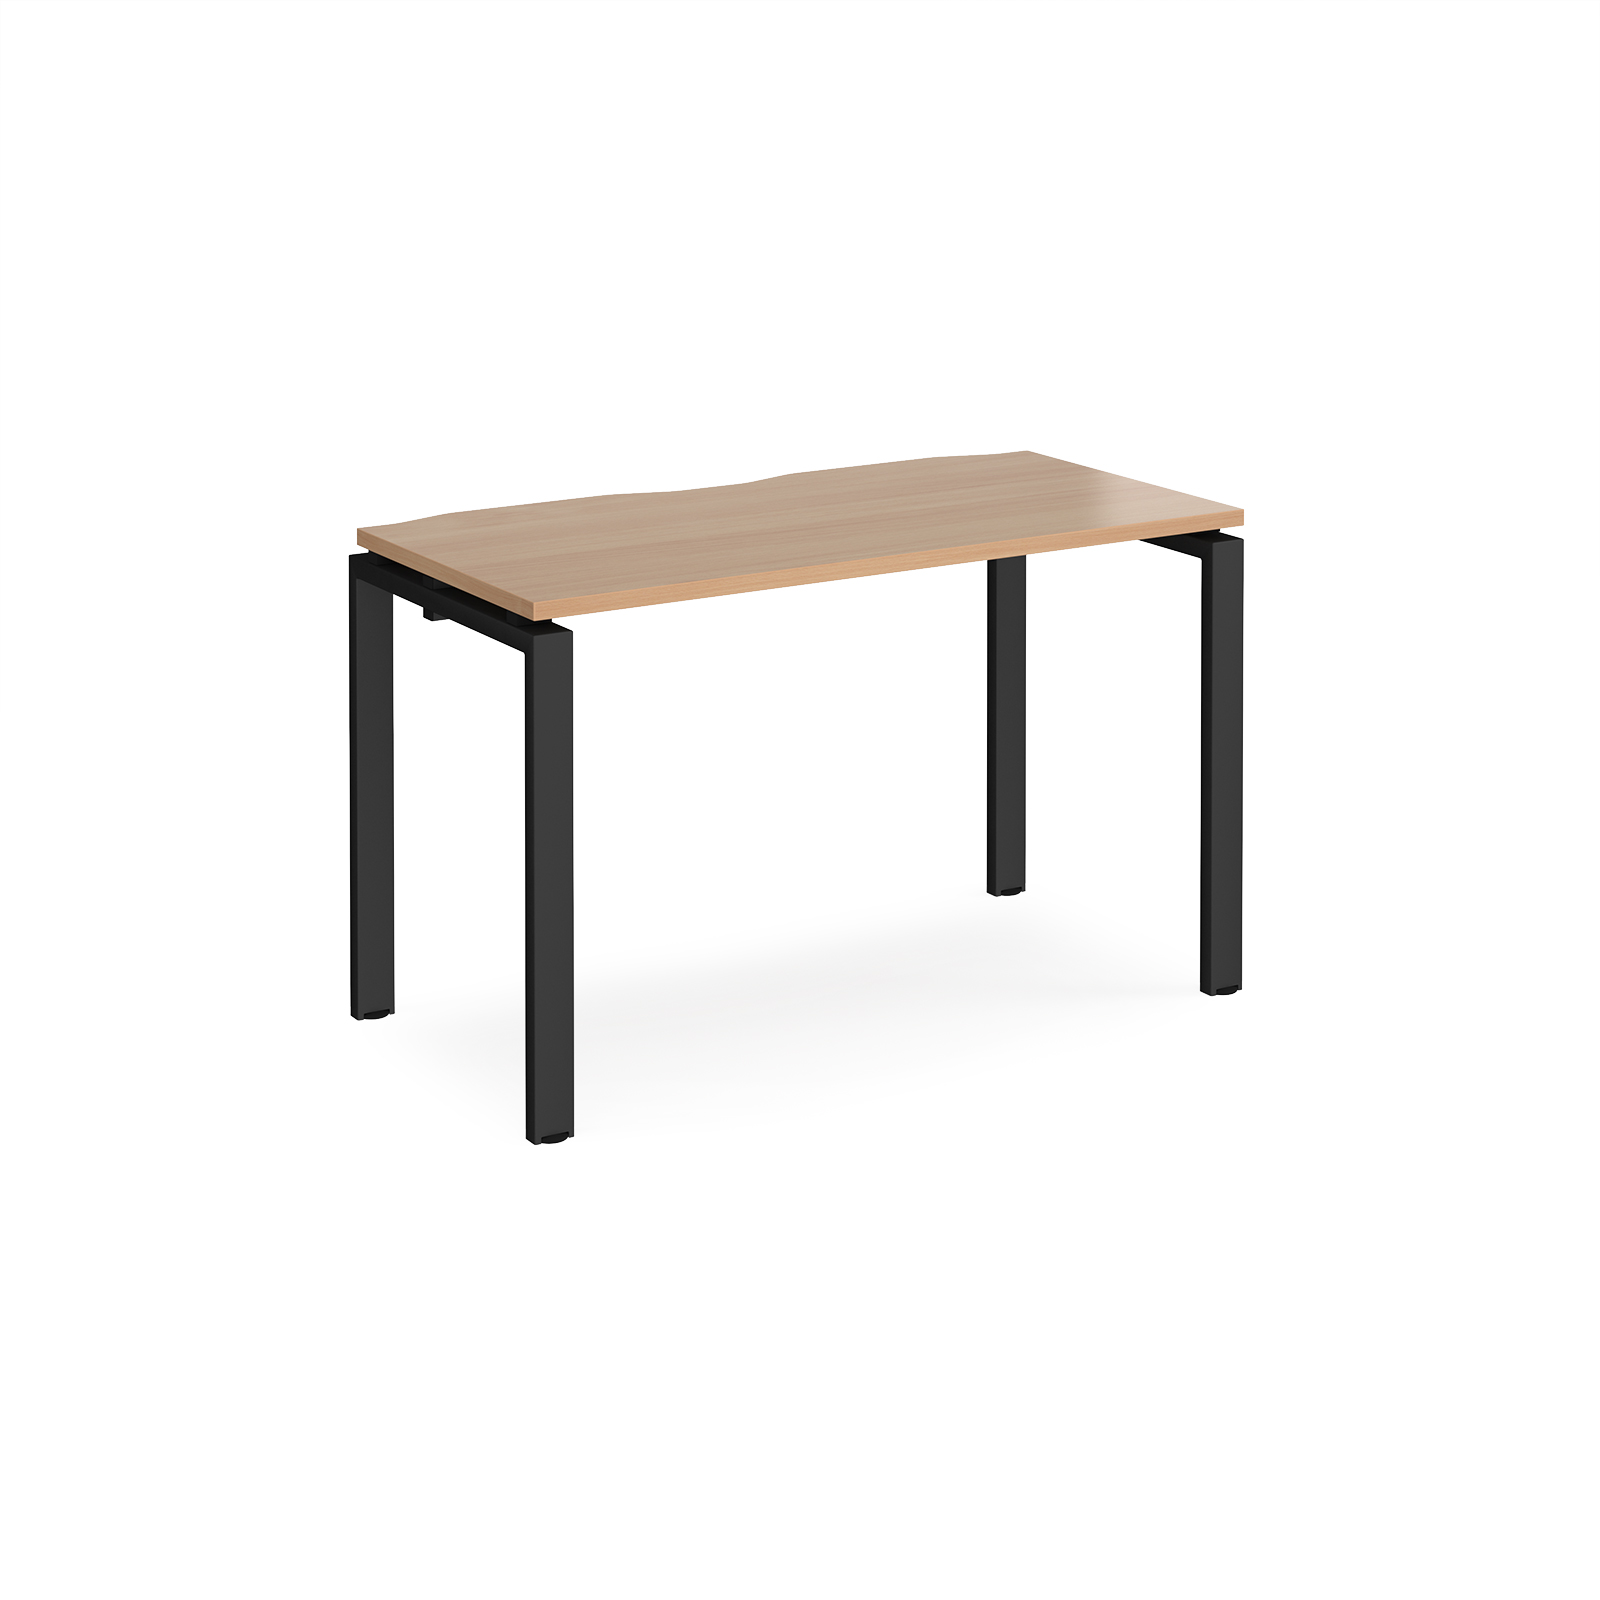 Adapt single desk 1200mm x 600mm - black frame, beech top